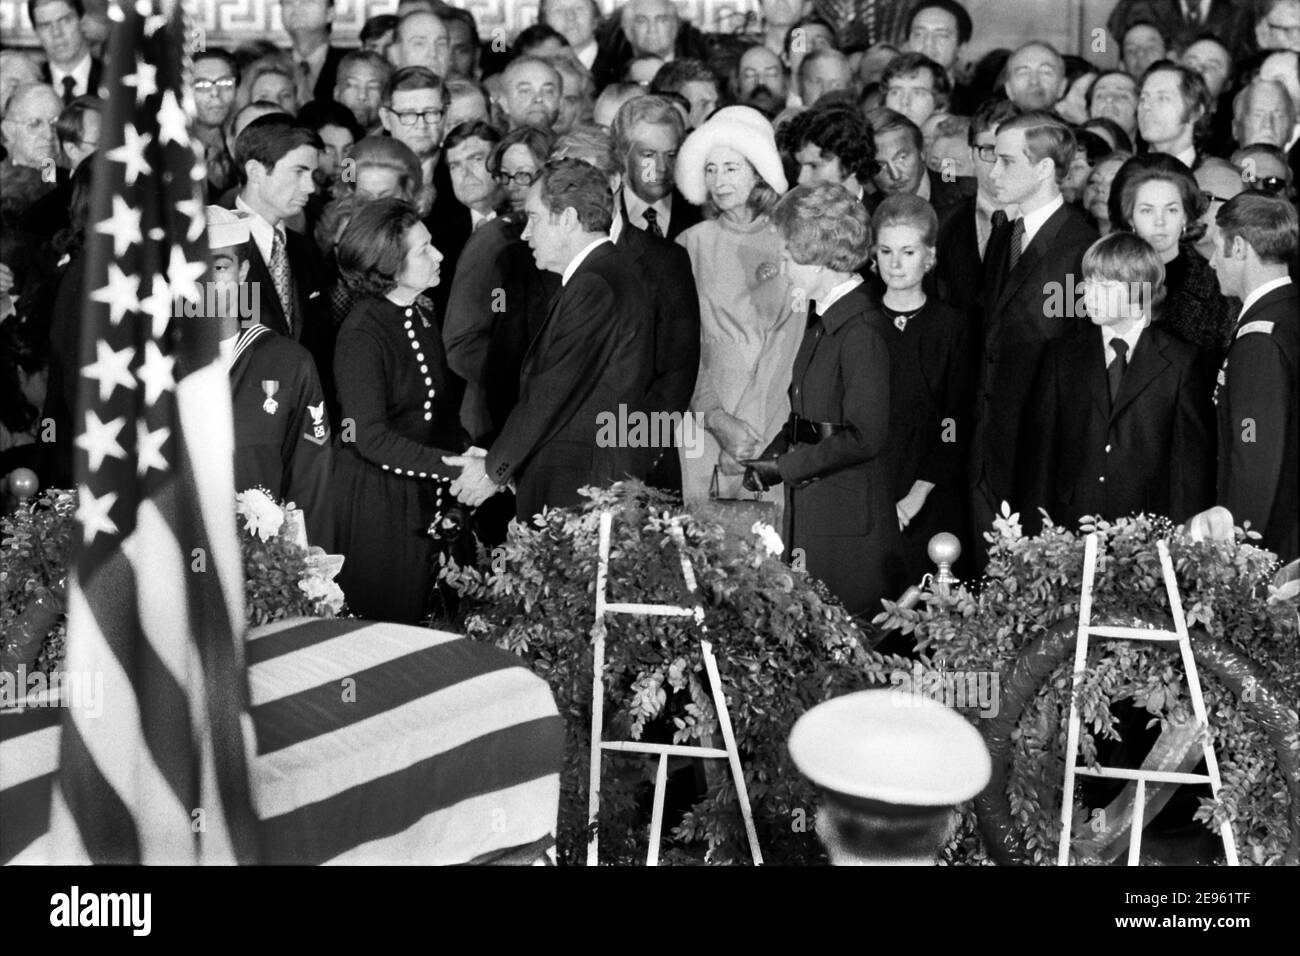 US-Präsident im Gespräch mit Claudia 'Lady Bird' Johnson während der Beerdigung des ehemaligen US-Präsidenten Lyndon Johnson im Kapitolgebäude, Washington, D.C., USA, Marion S. Trikosko, 24. Januar 1973 Stockfoto